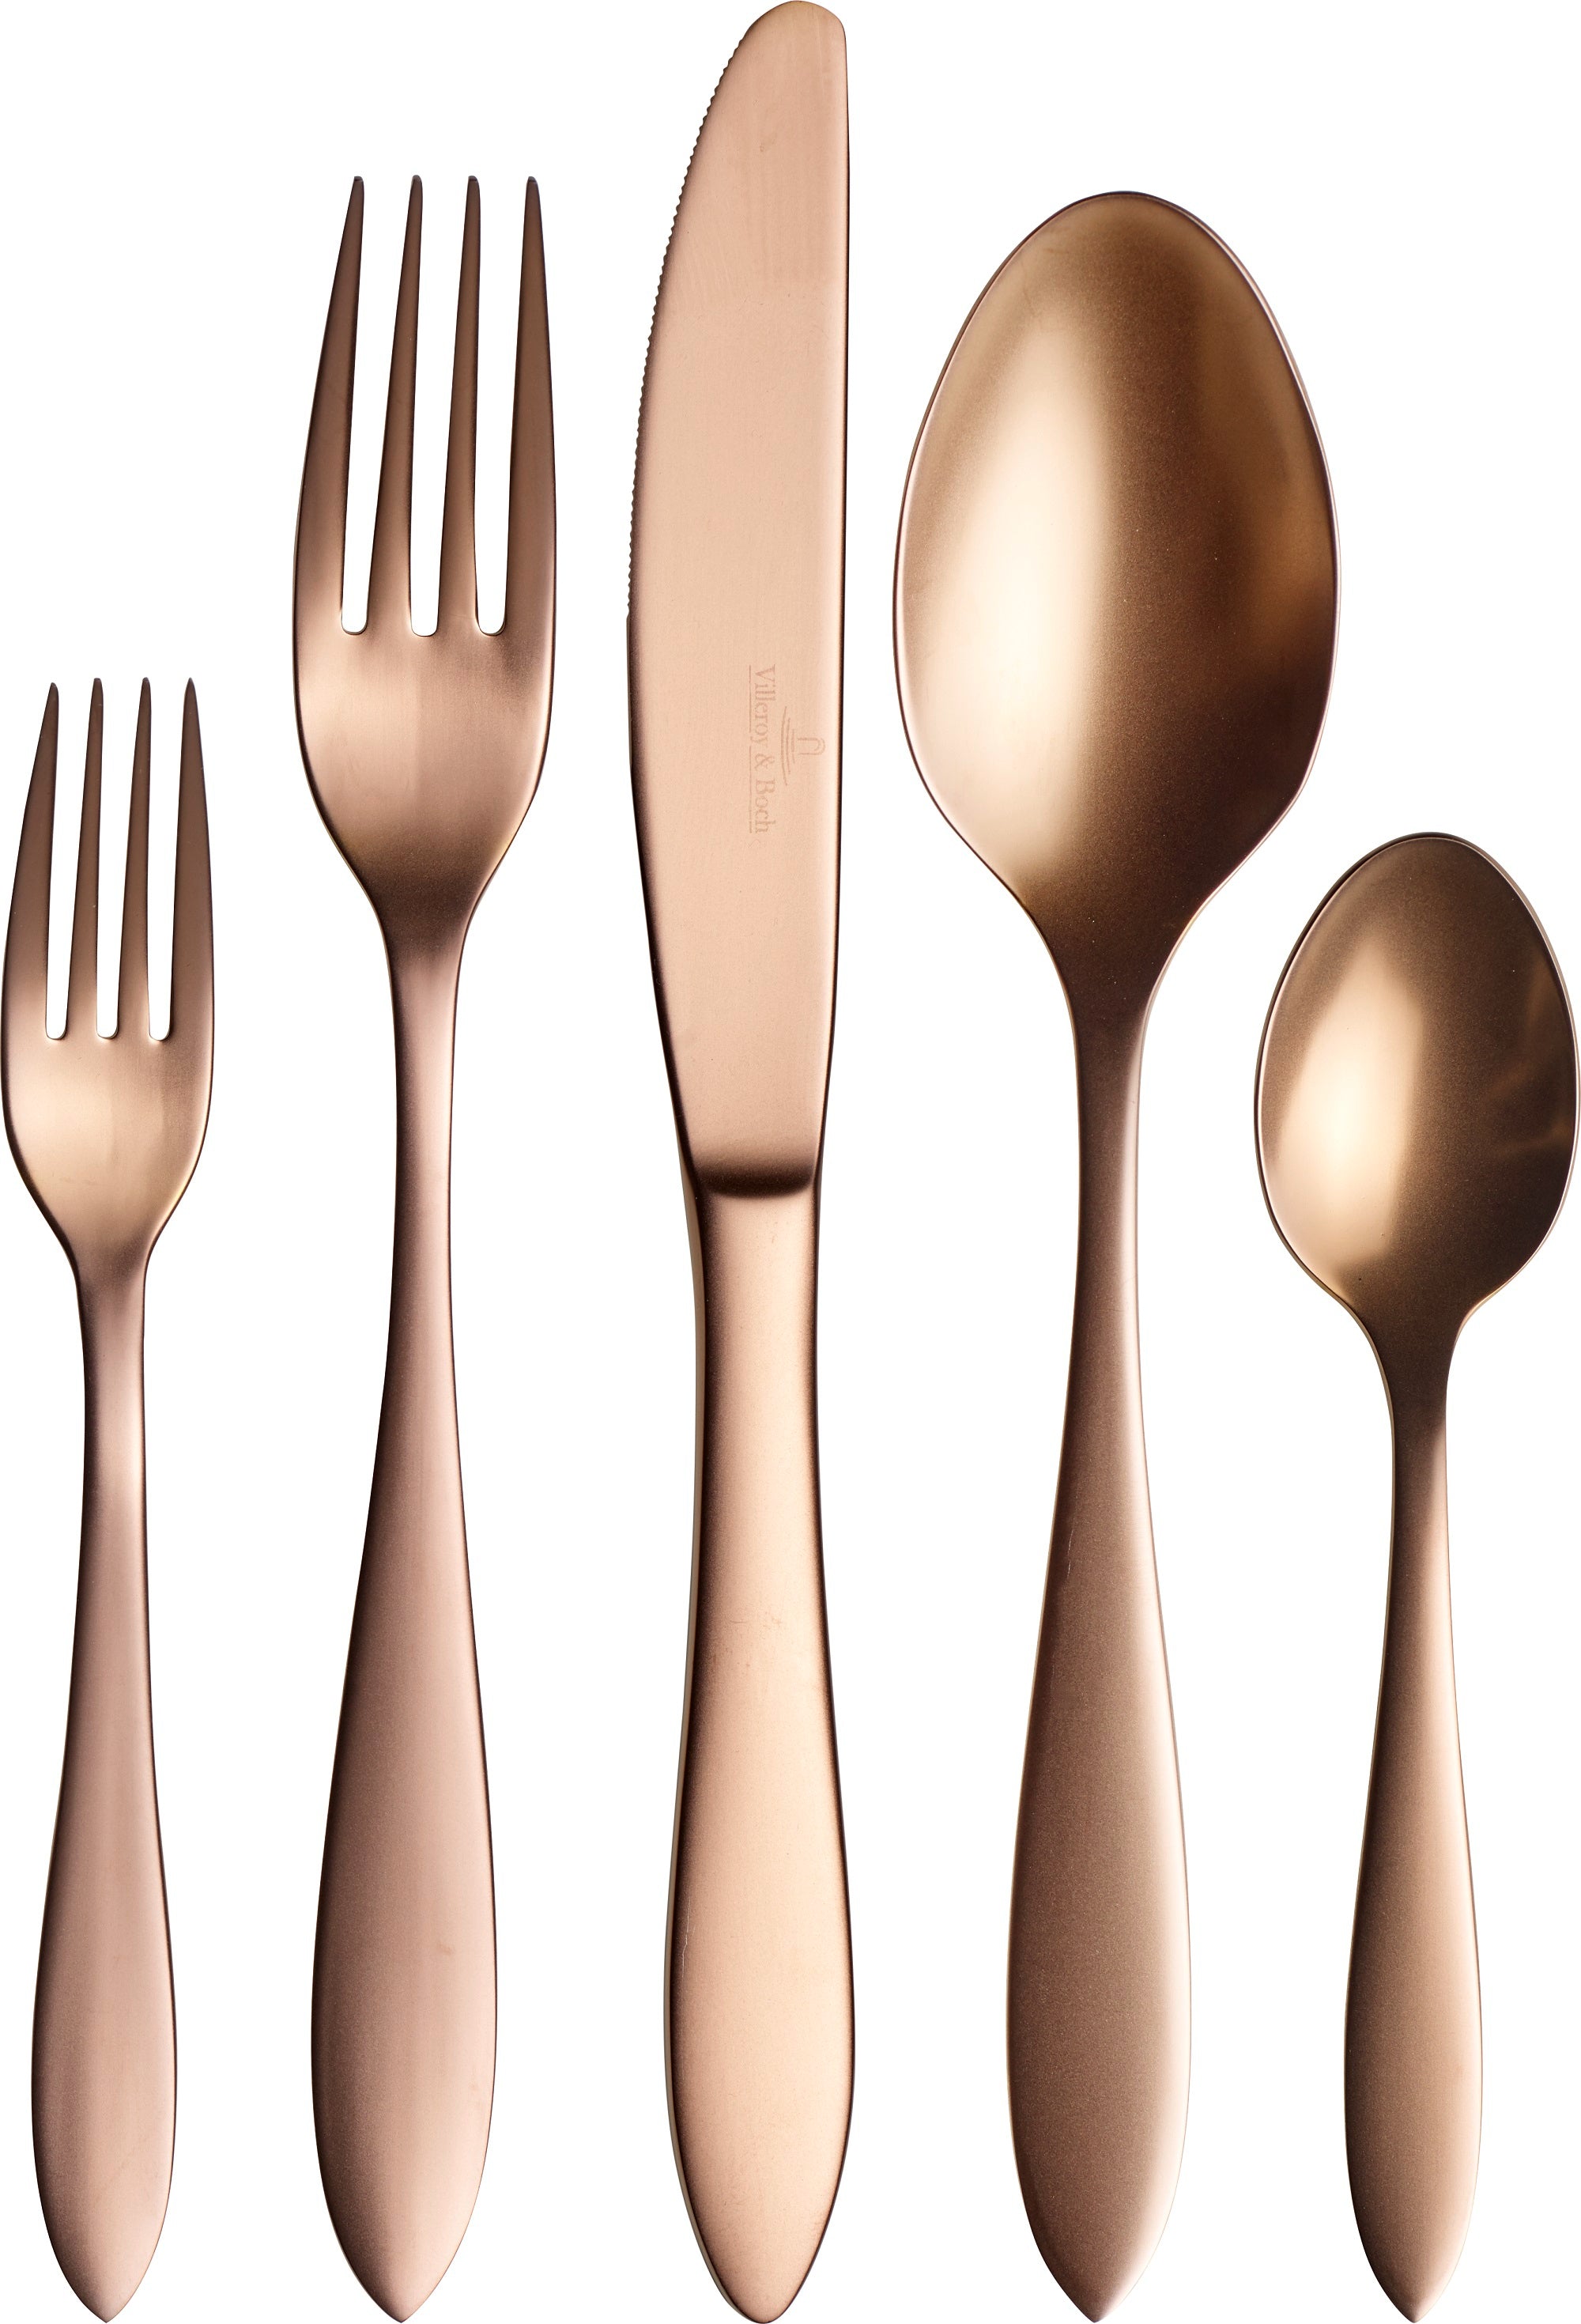 Villeroy & Boch Manufacture Cutlery posate da tavola 20 pezzi